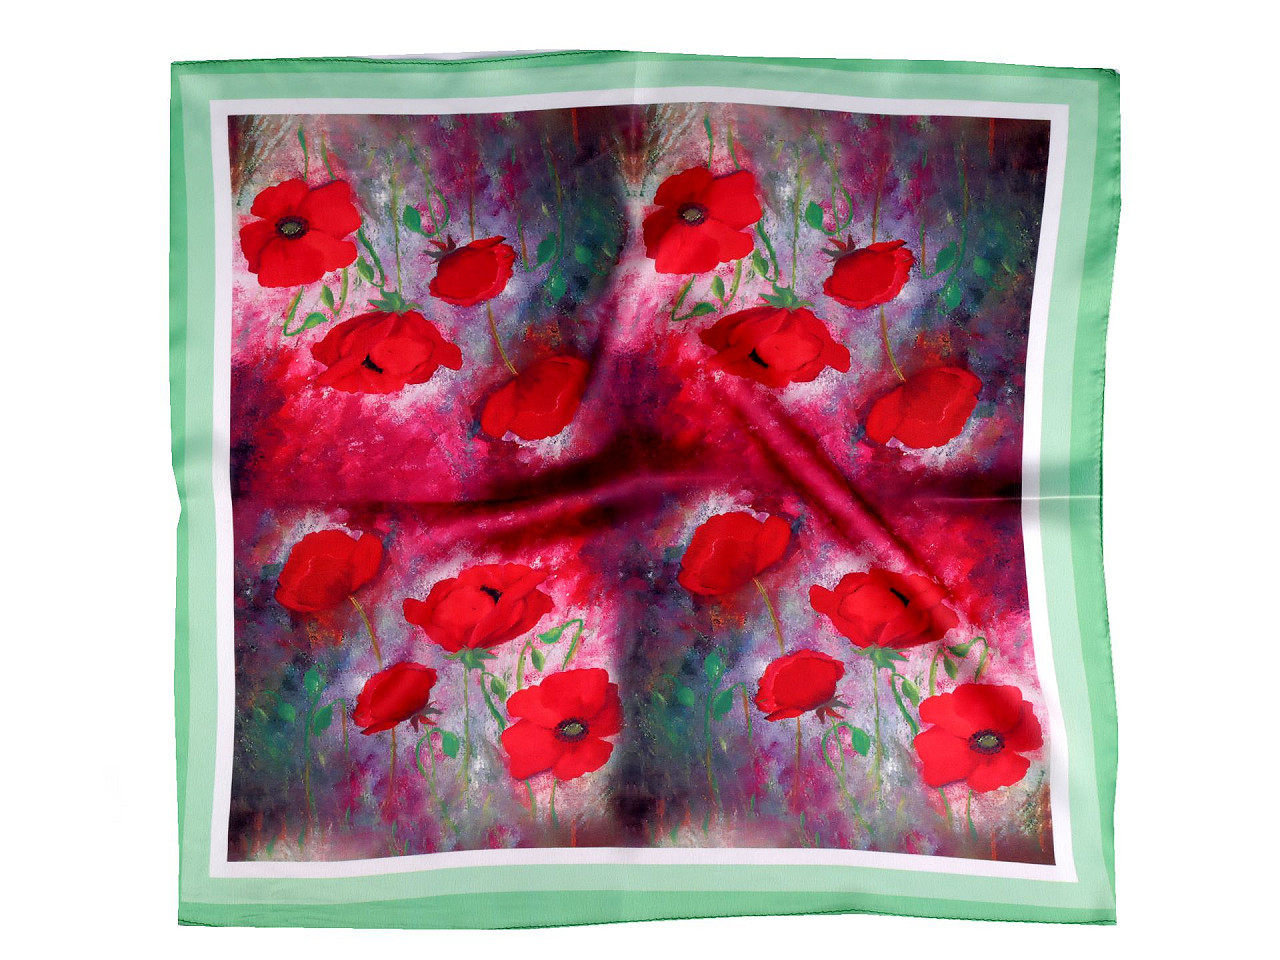 Saténový šátek 50x50 cm, barva 2 červenorůžová zelená